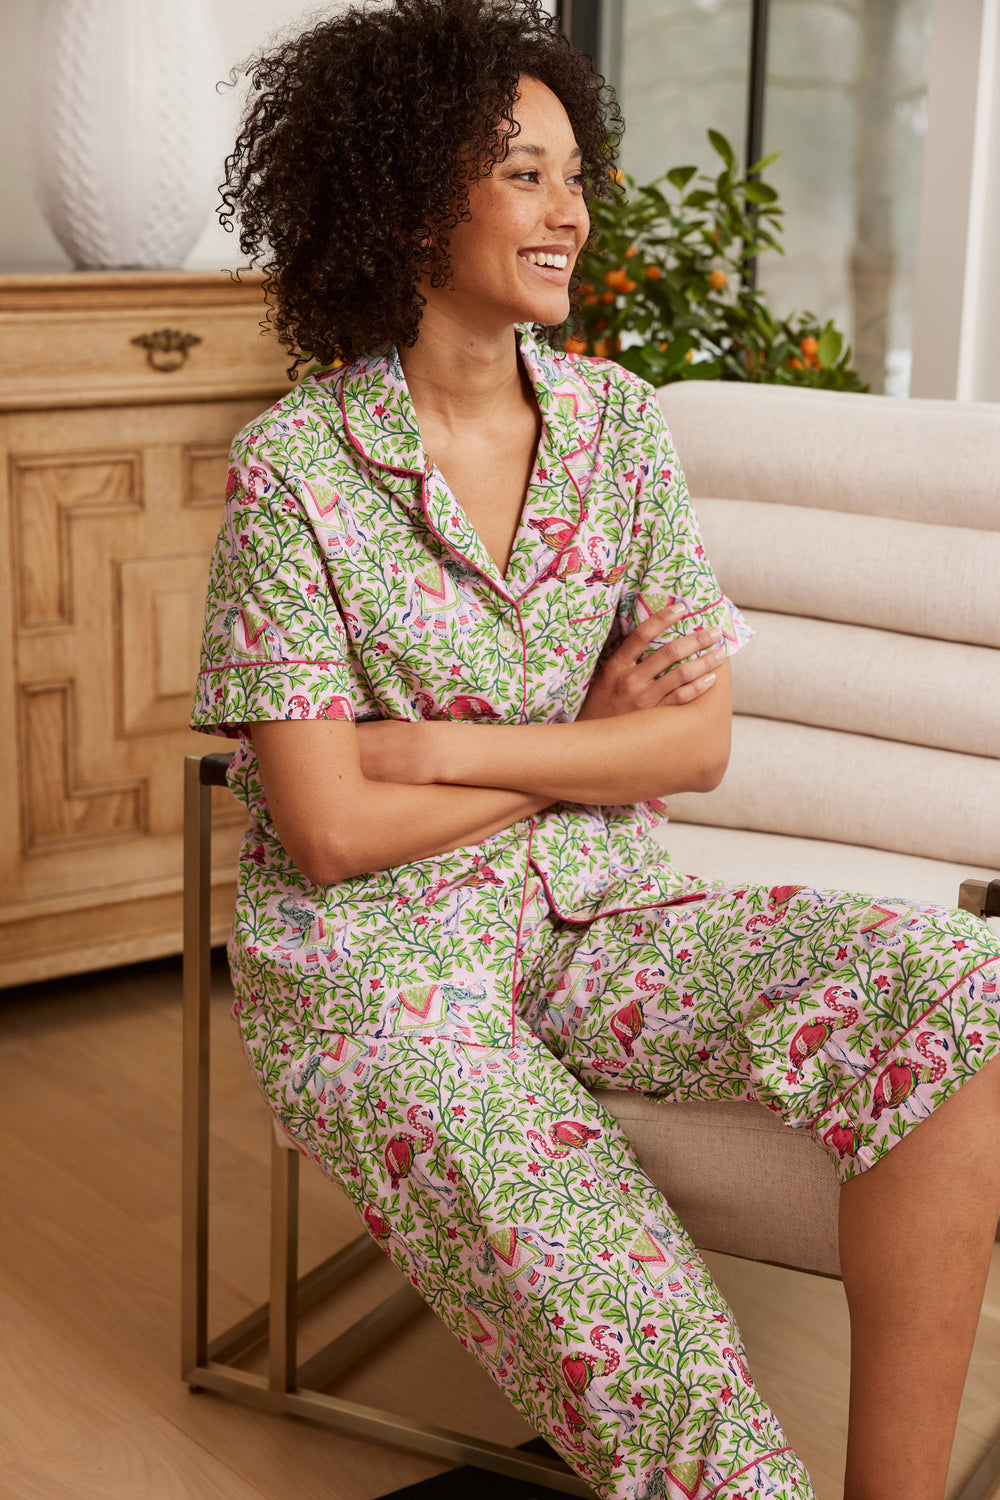 Flamenco - Short Sleeve Top & Cropped Pajama Pants Set - Rose Garden - Printfresh